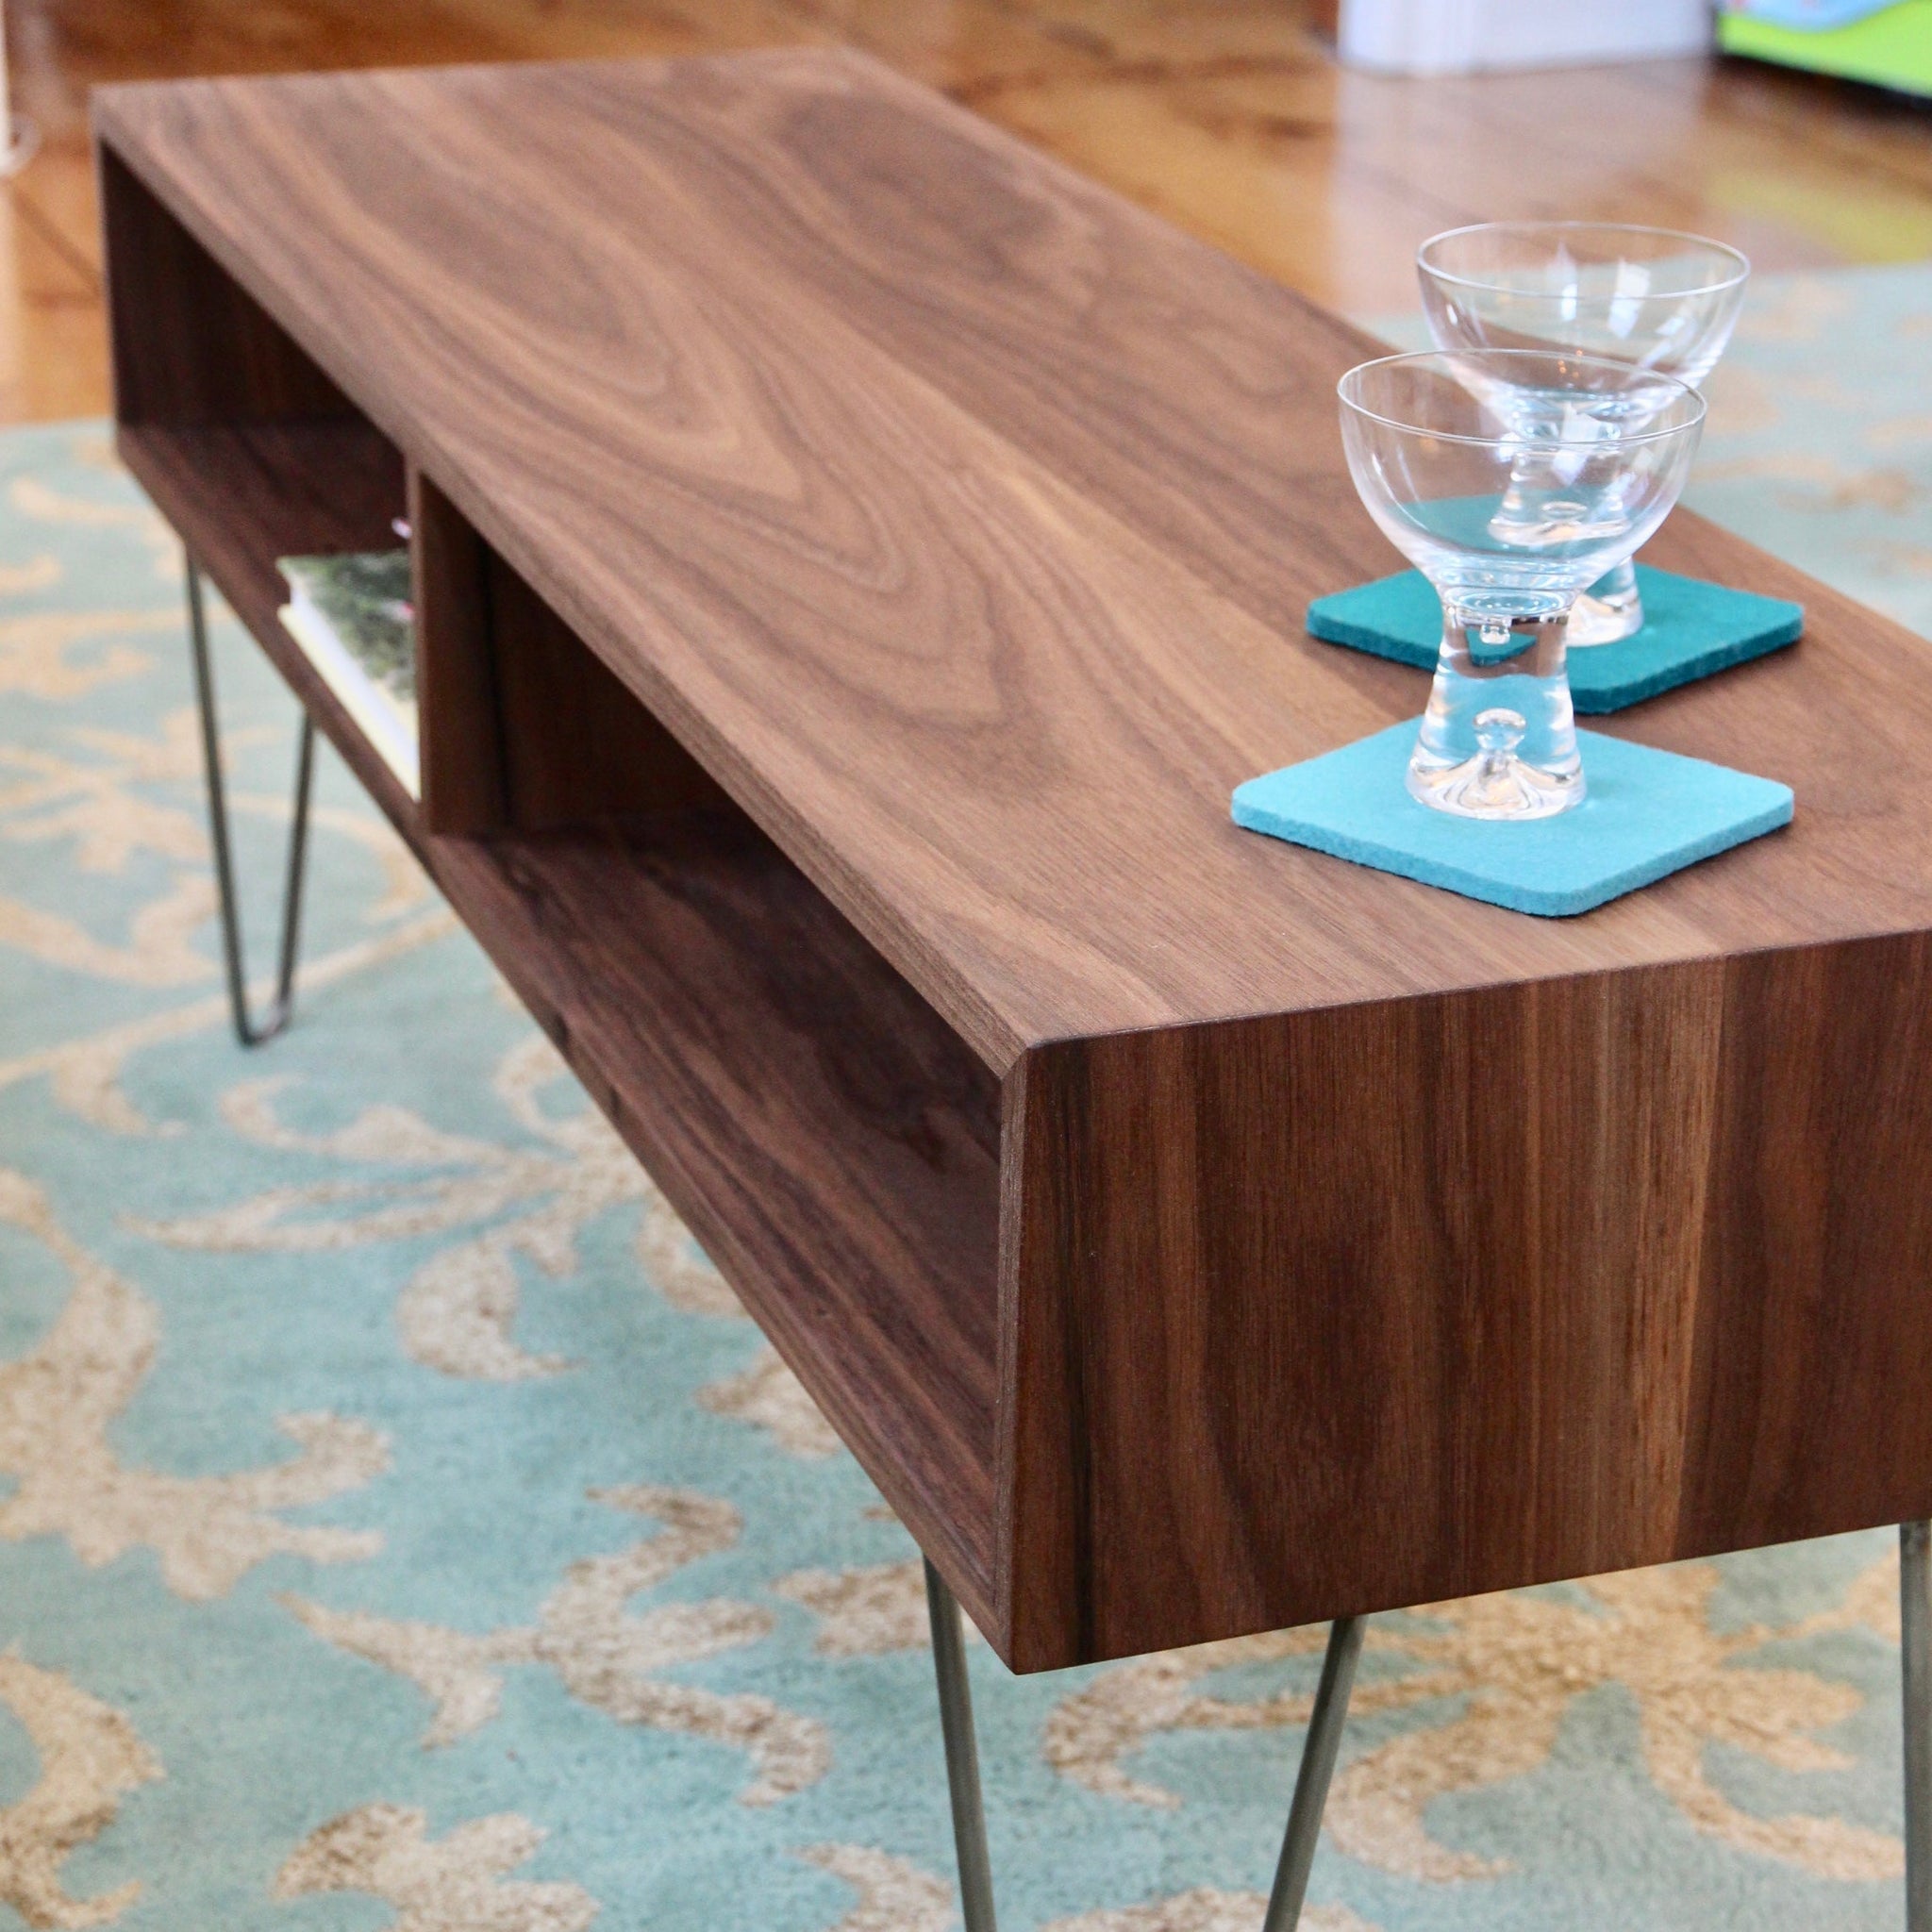 Walnut Coffee Table, Mid-Century Modern Style - Krøvel Furniture Co. Handmade in Maine